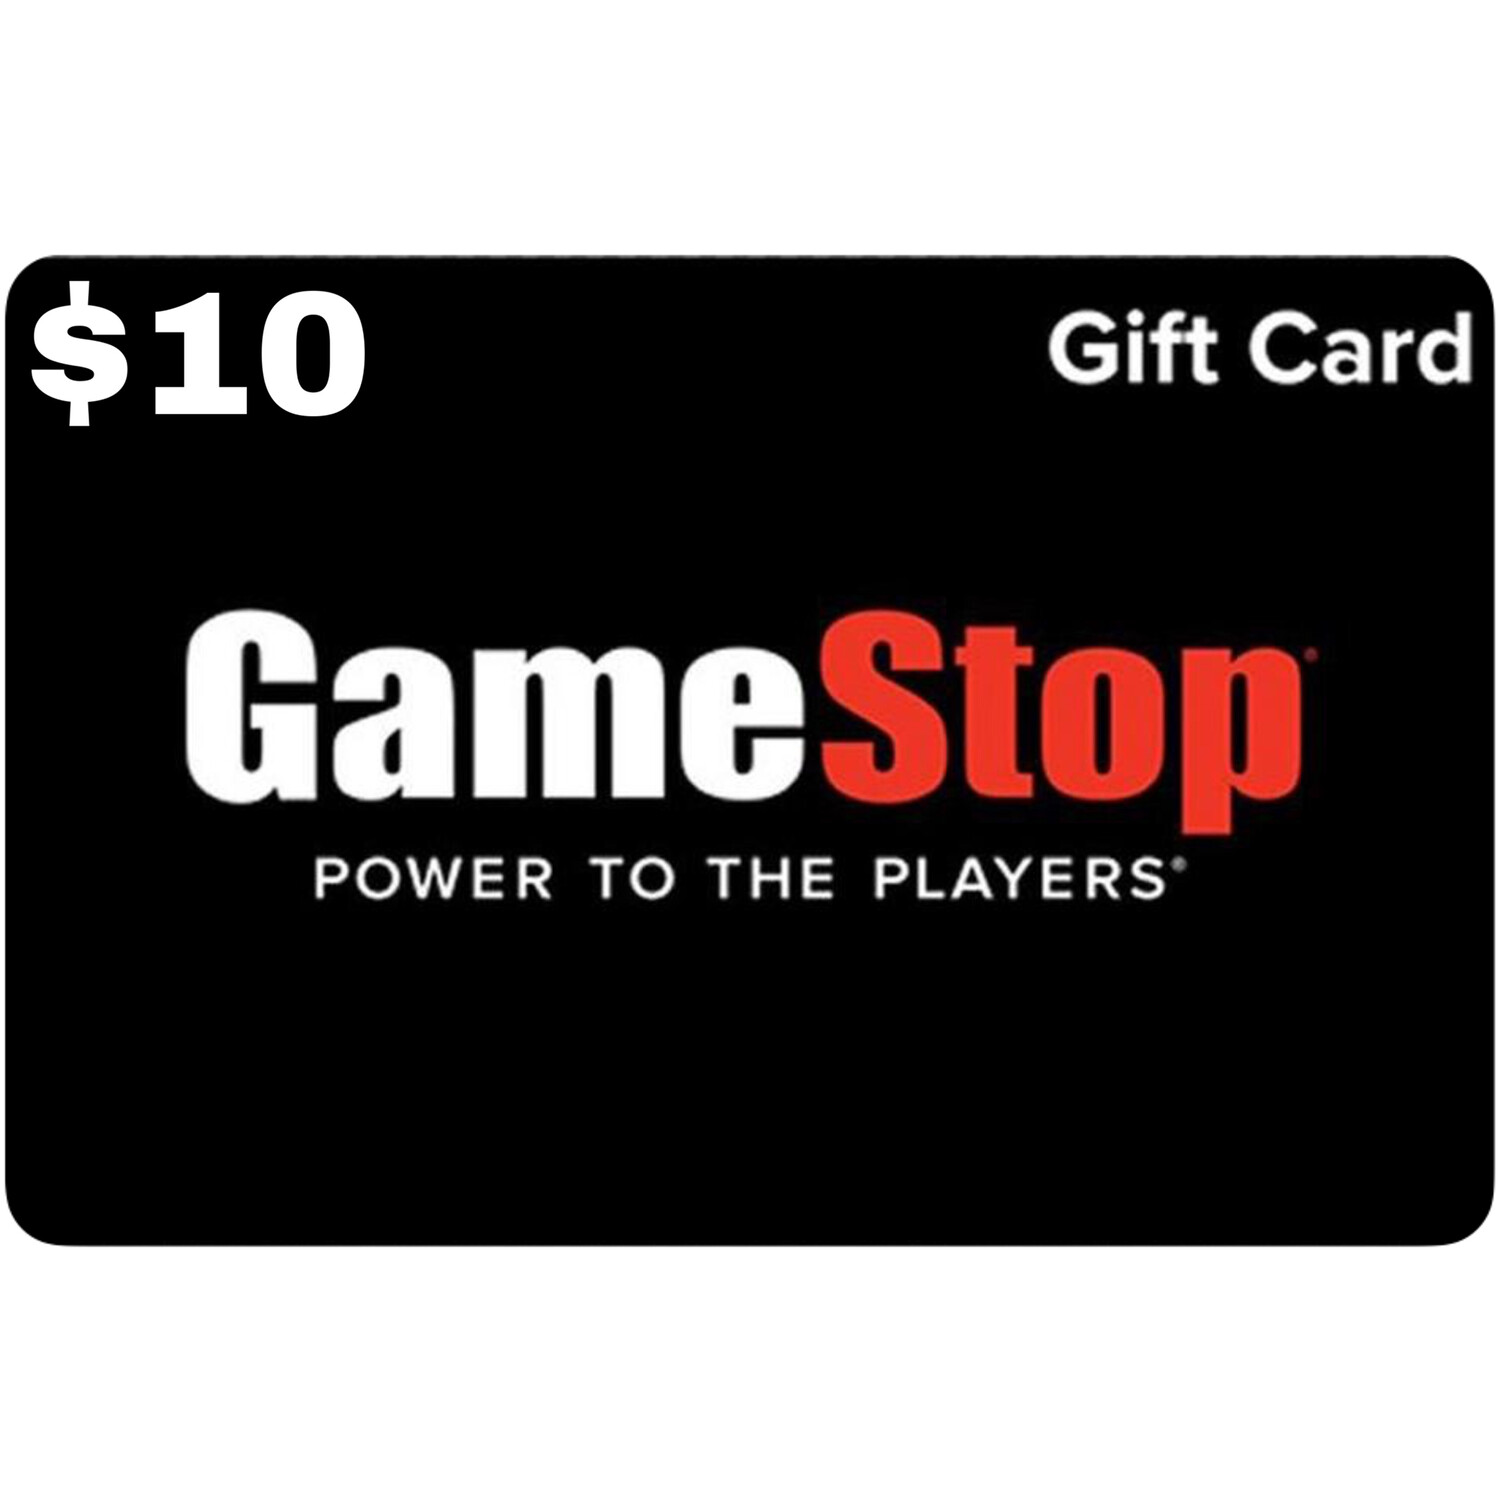 Gamestop Gift Card $10